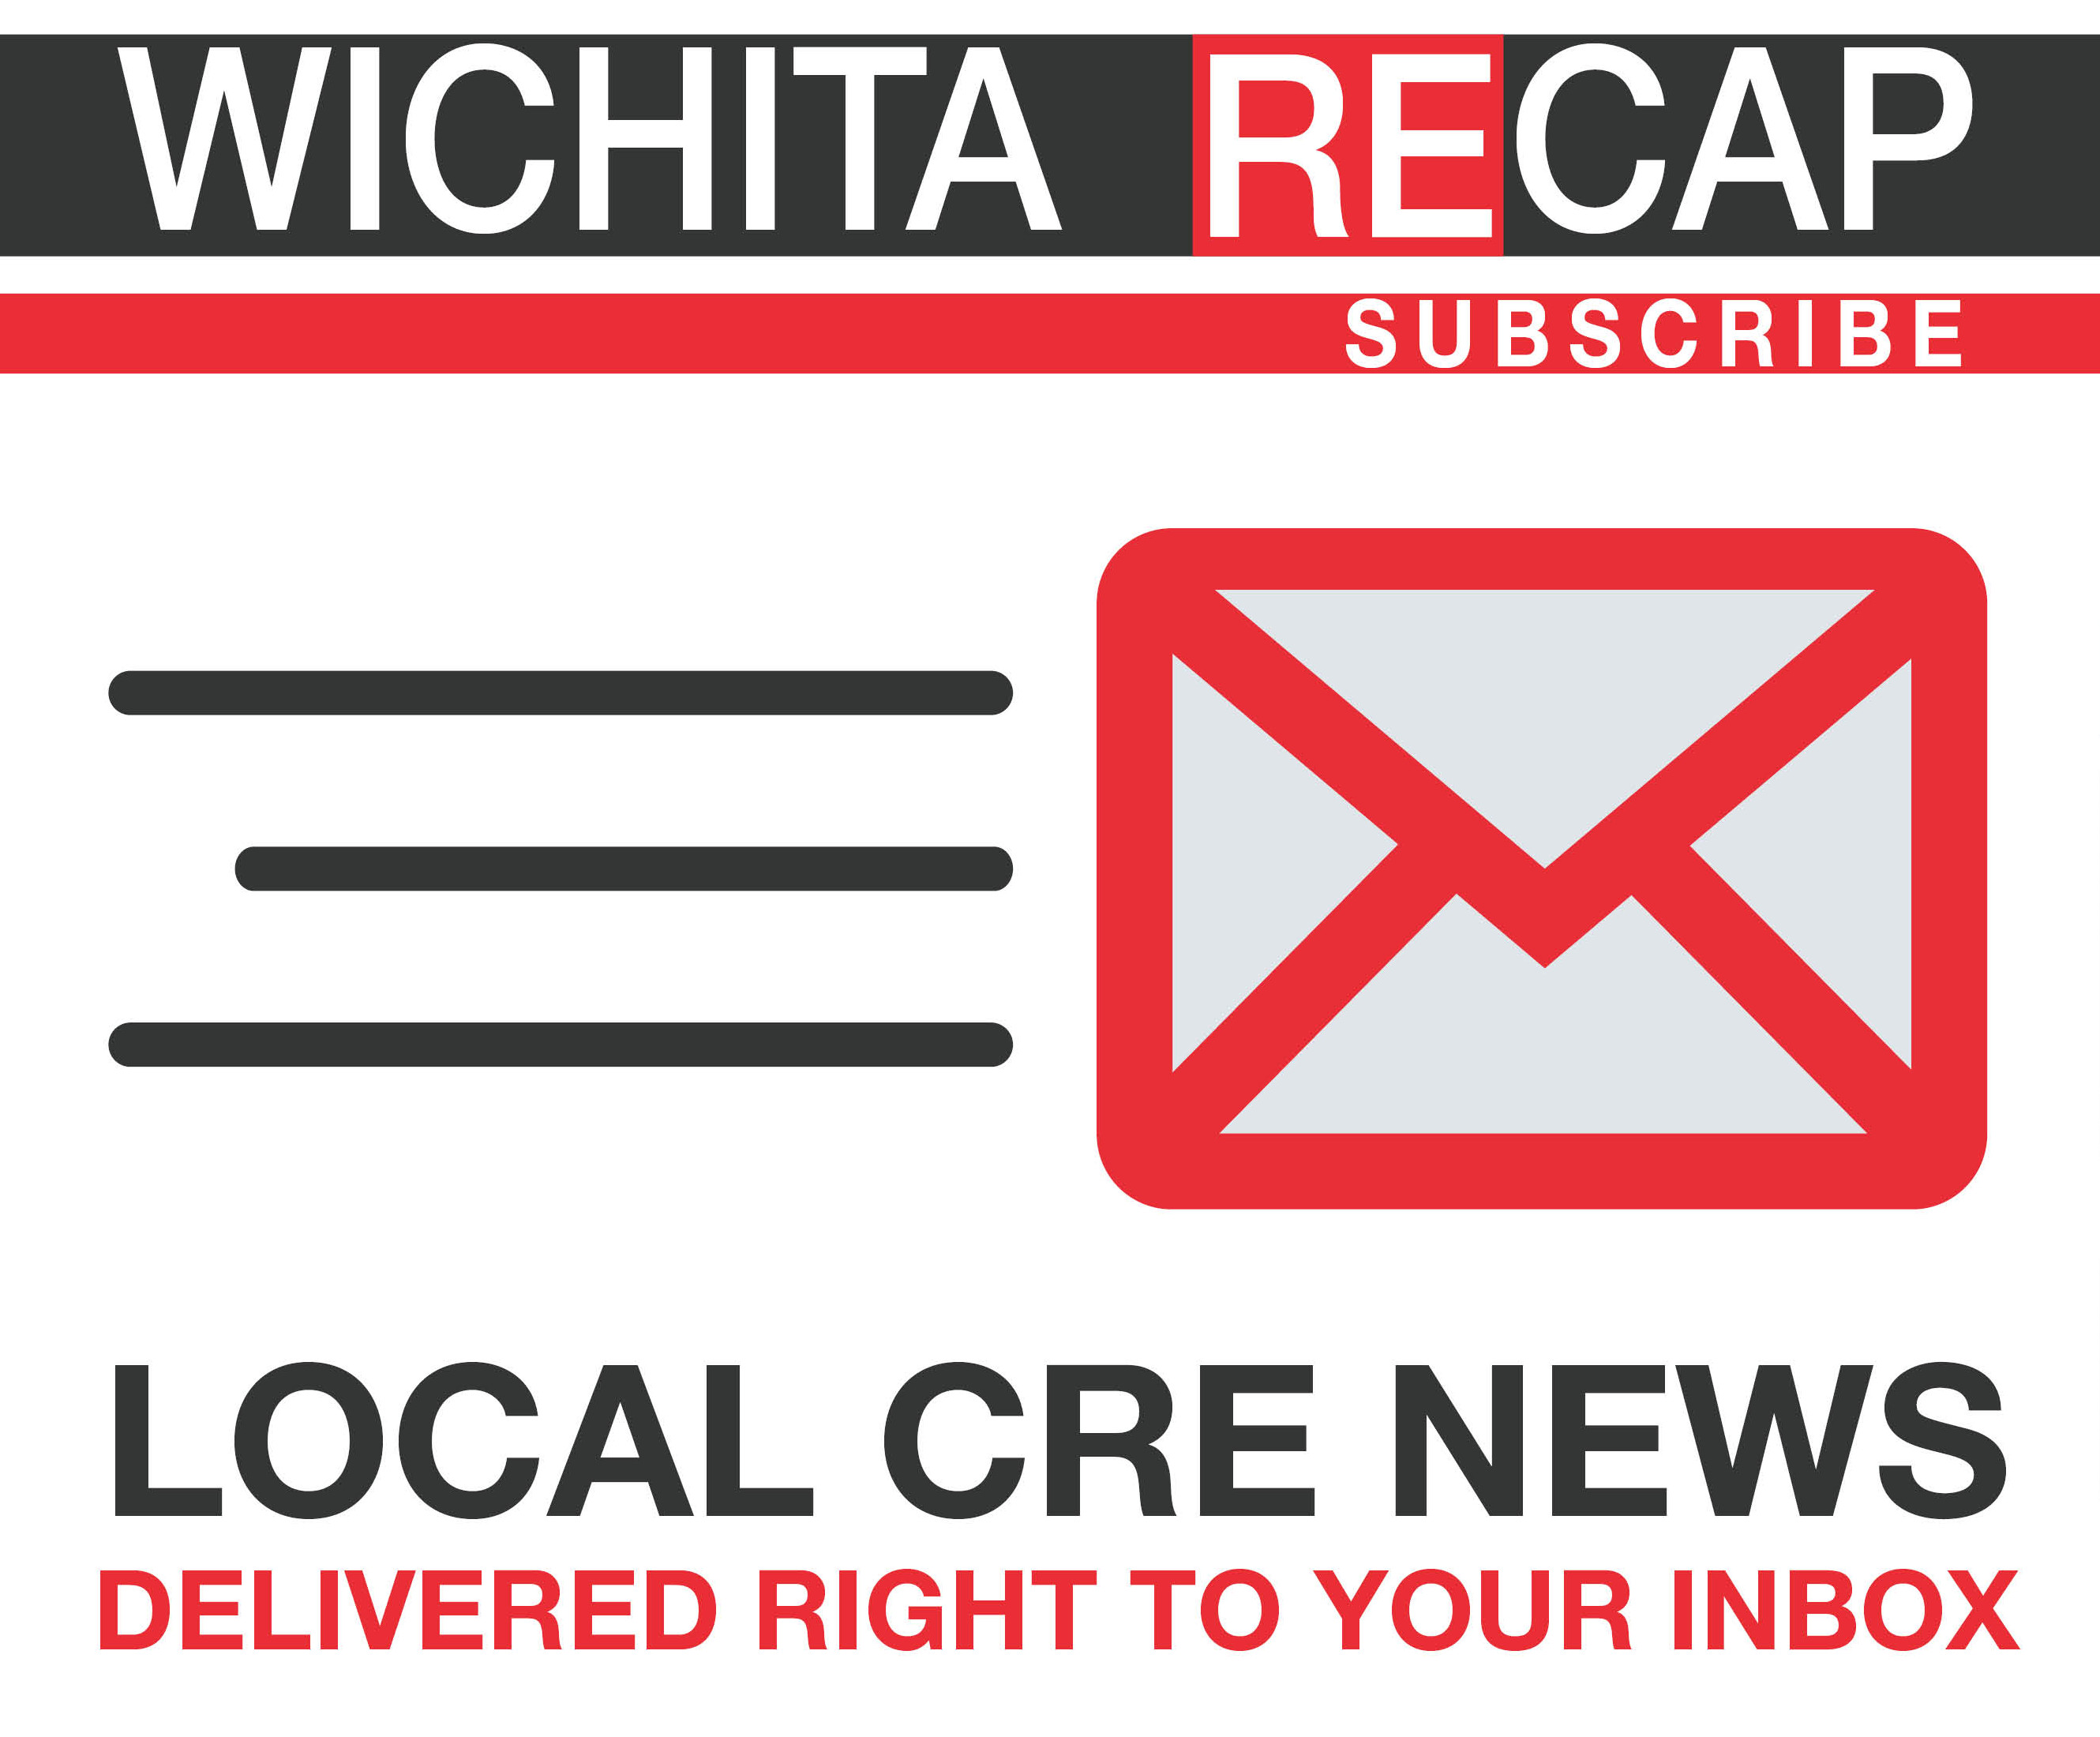 NAI Martens, Wichita Recap, Wichita Commercial Real Estate, CRE News, Wichita News